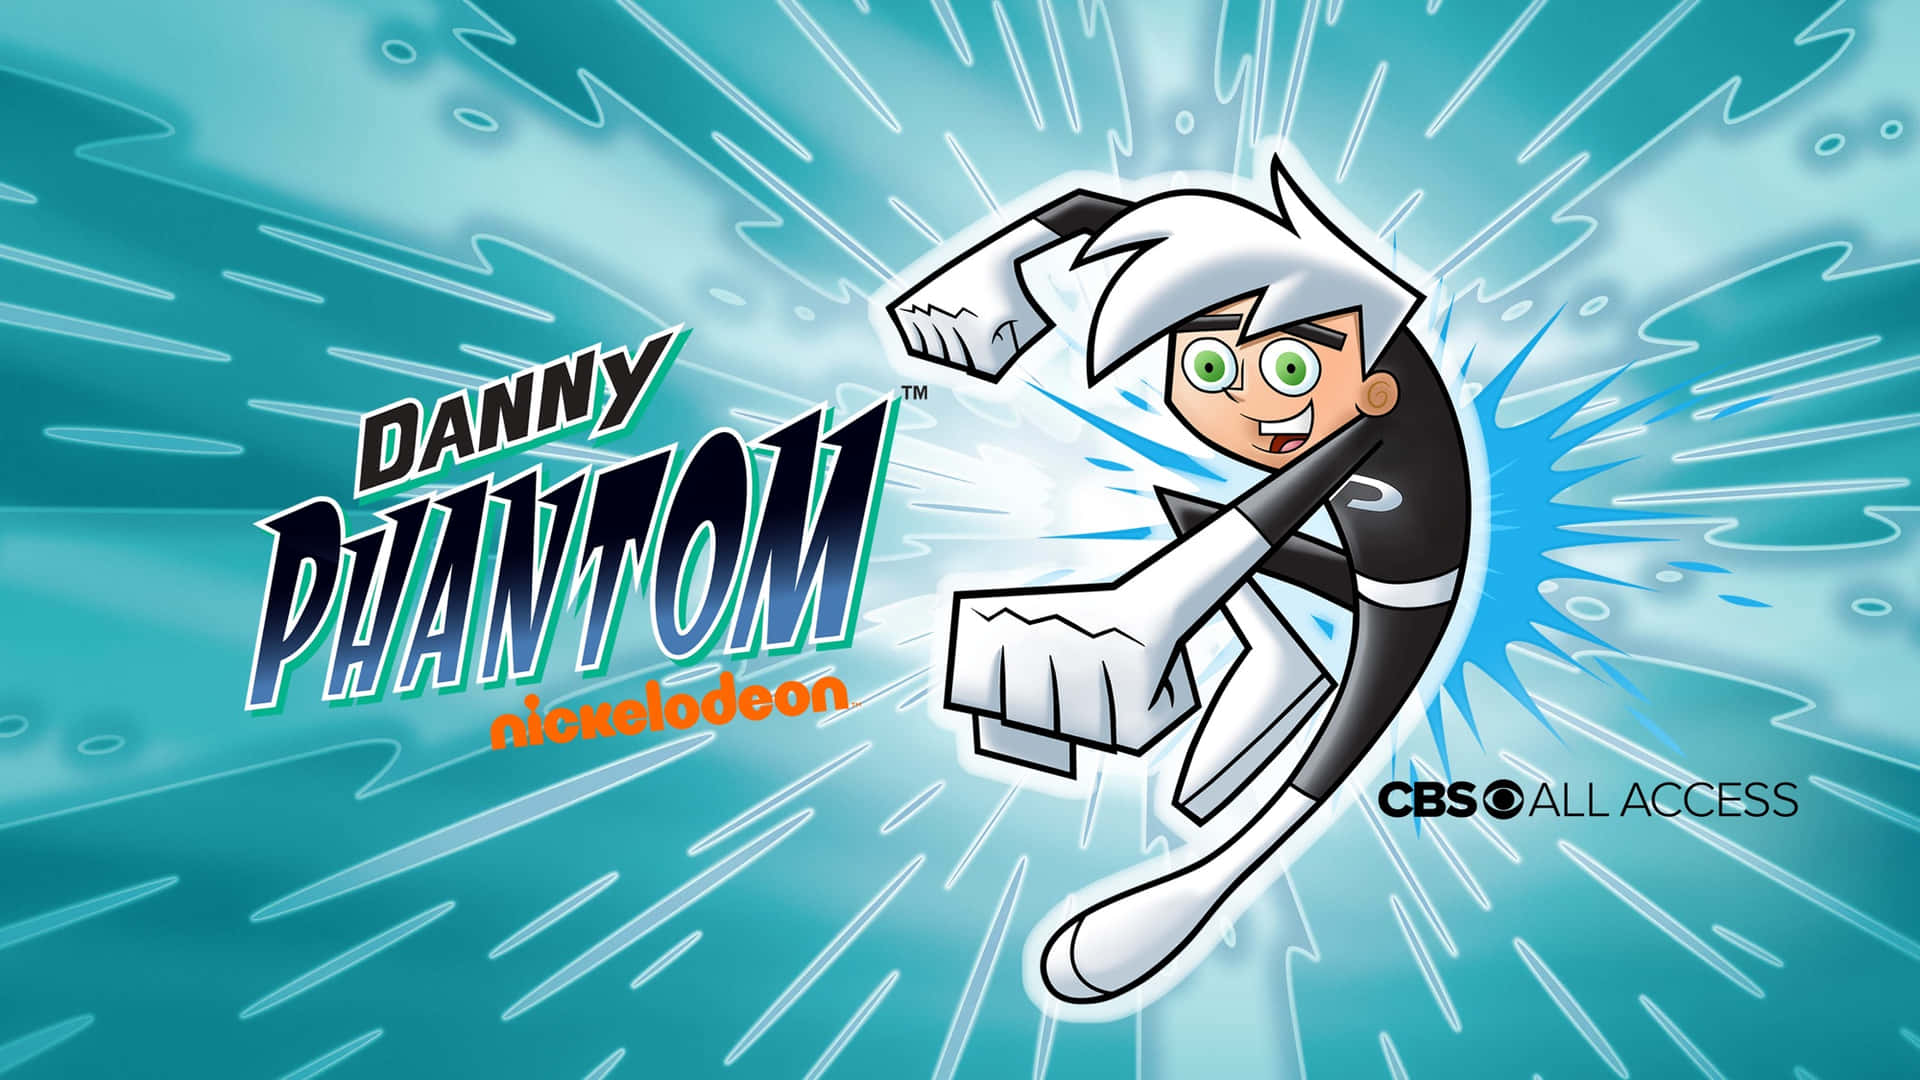 Danny Phantom er en heltisk teen halv spøgelse, i hans kamp mod ondskab. Wallpaper